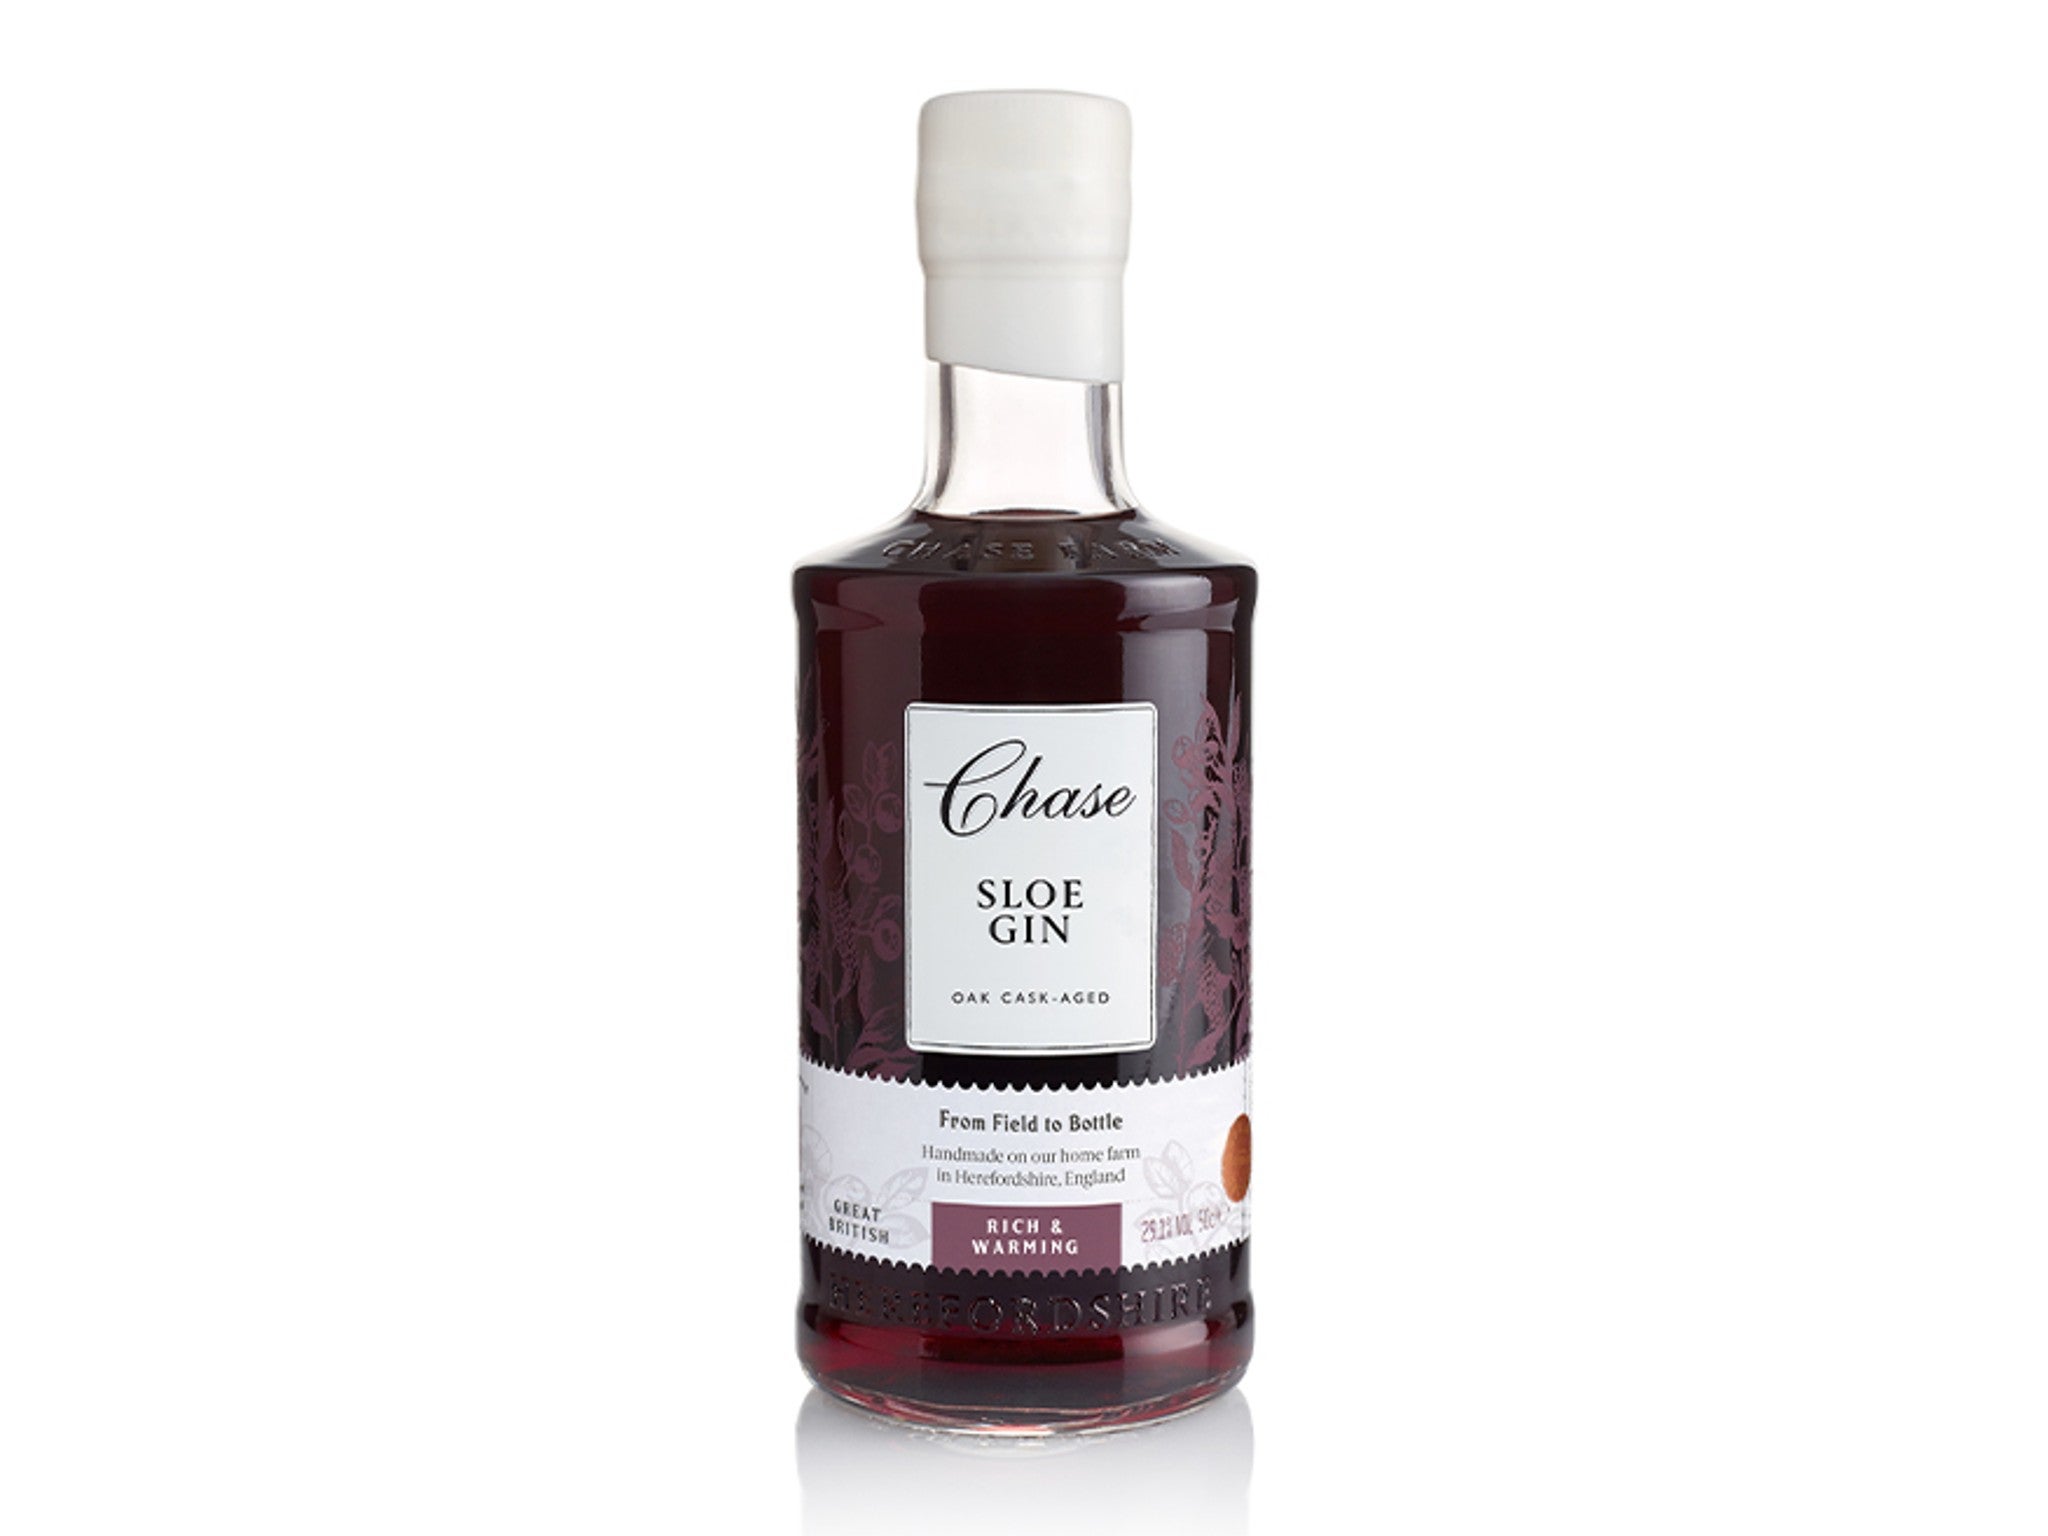 Chase oak aged sloe gin, 50cl indybest.jpeg